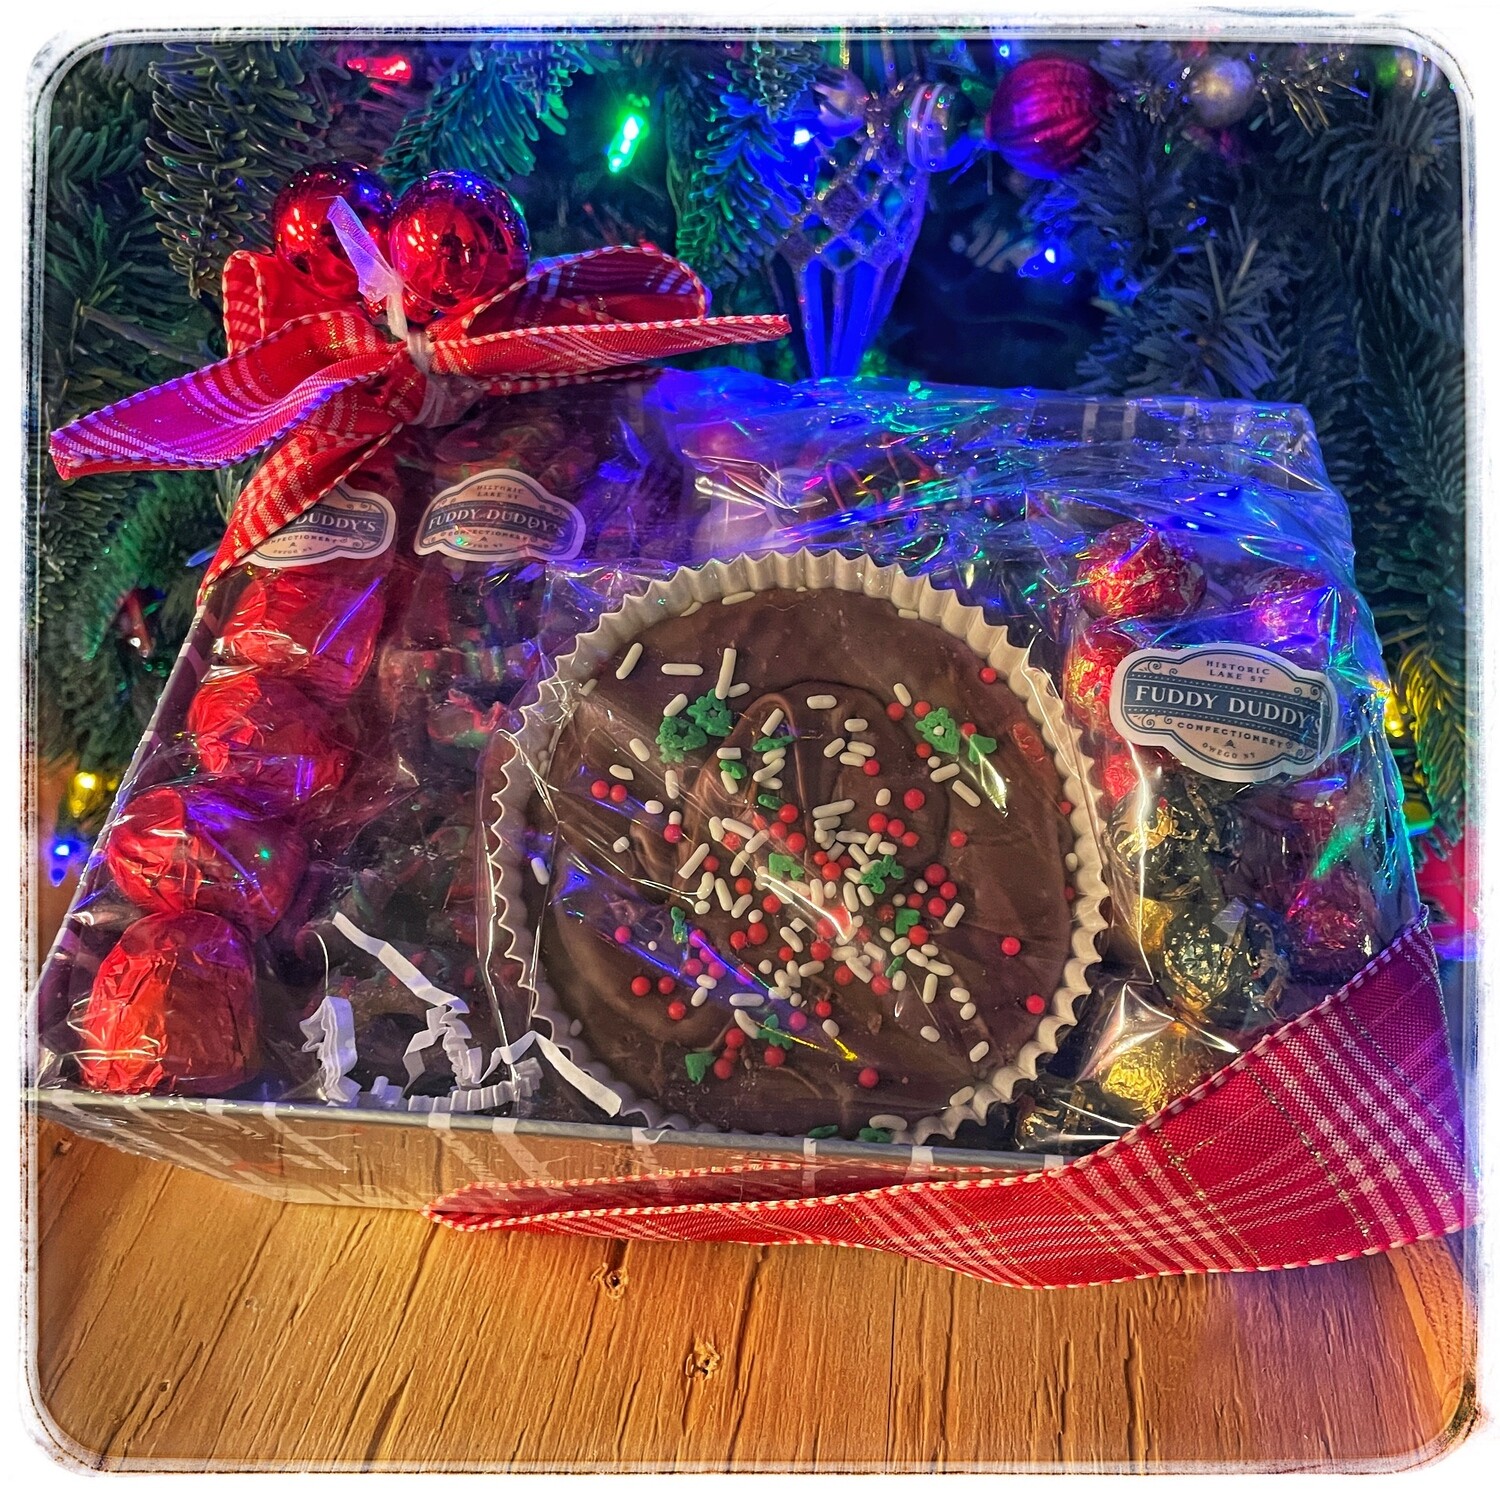 Fuddy Duddy's Chocolate Lovers Holiday Gift Box - Medium